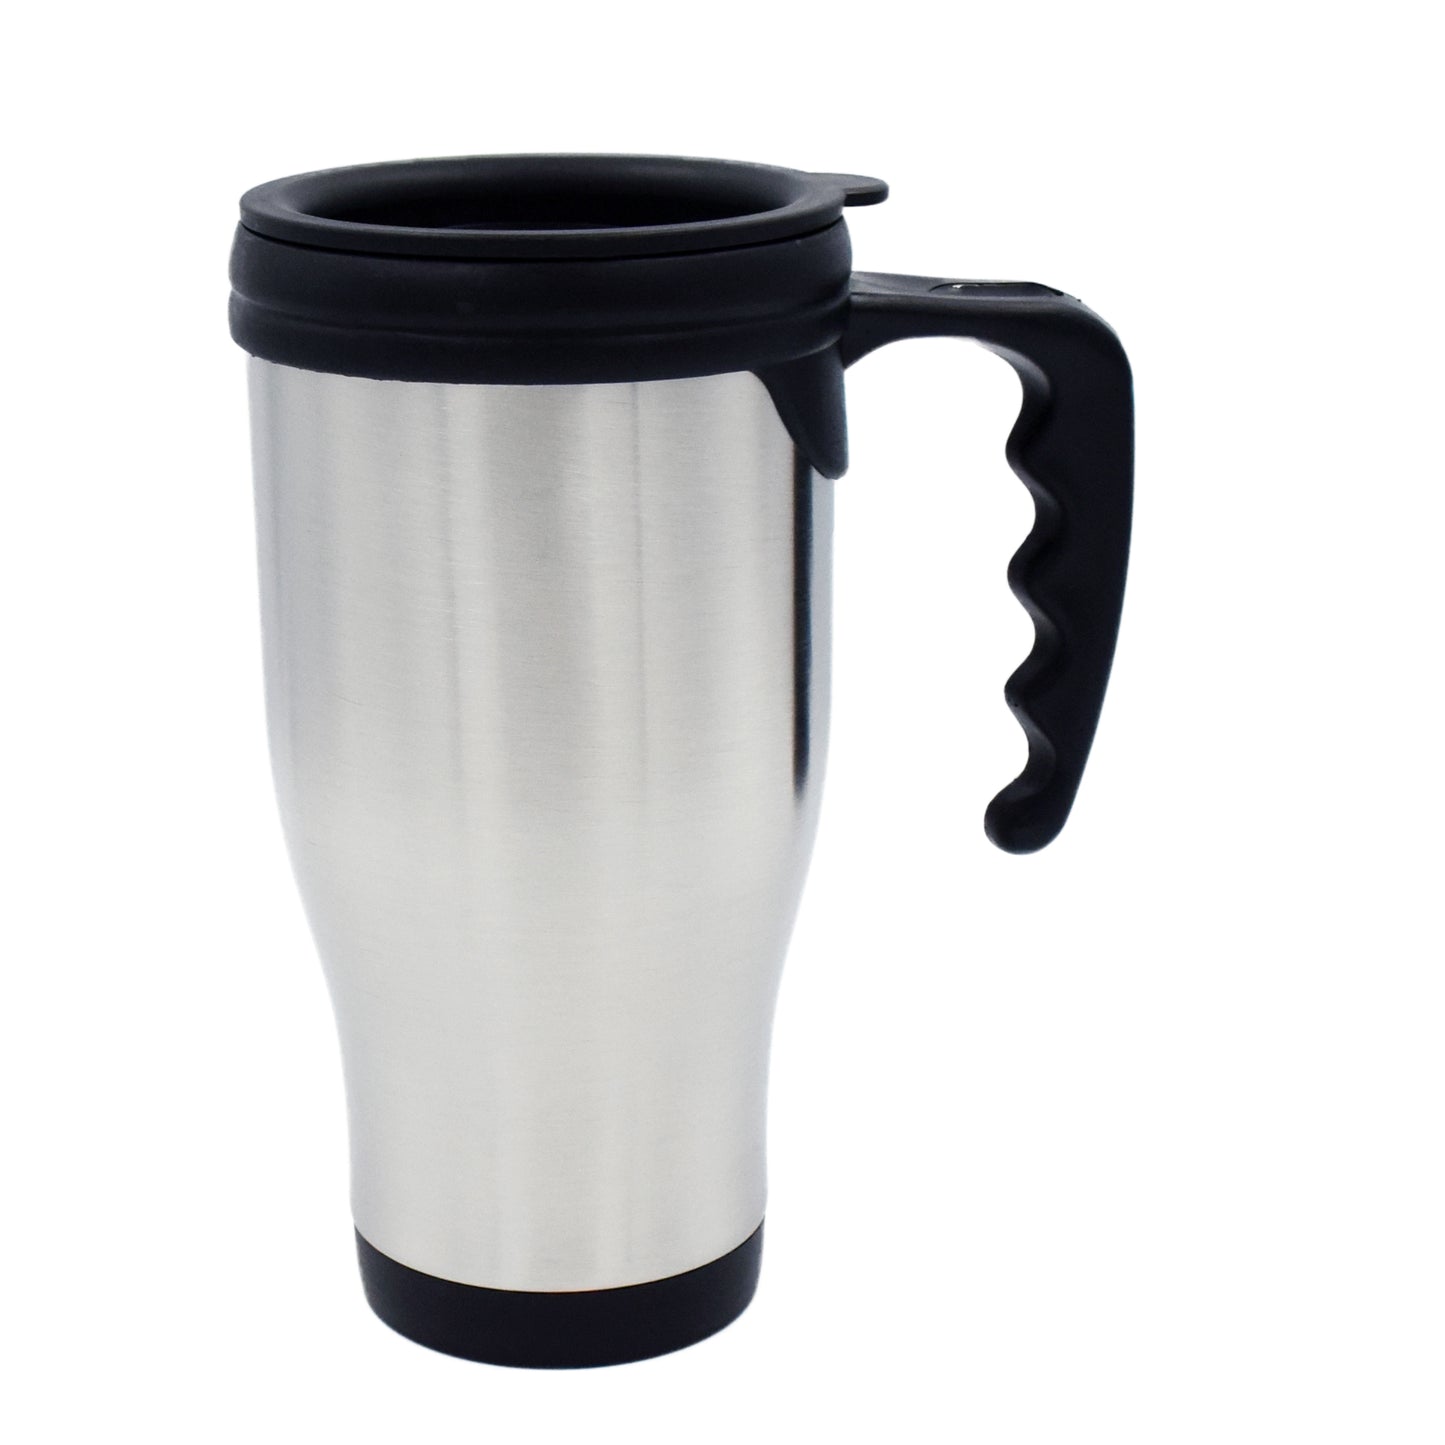 UN-559-Travel Mug